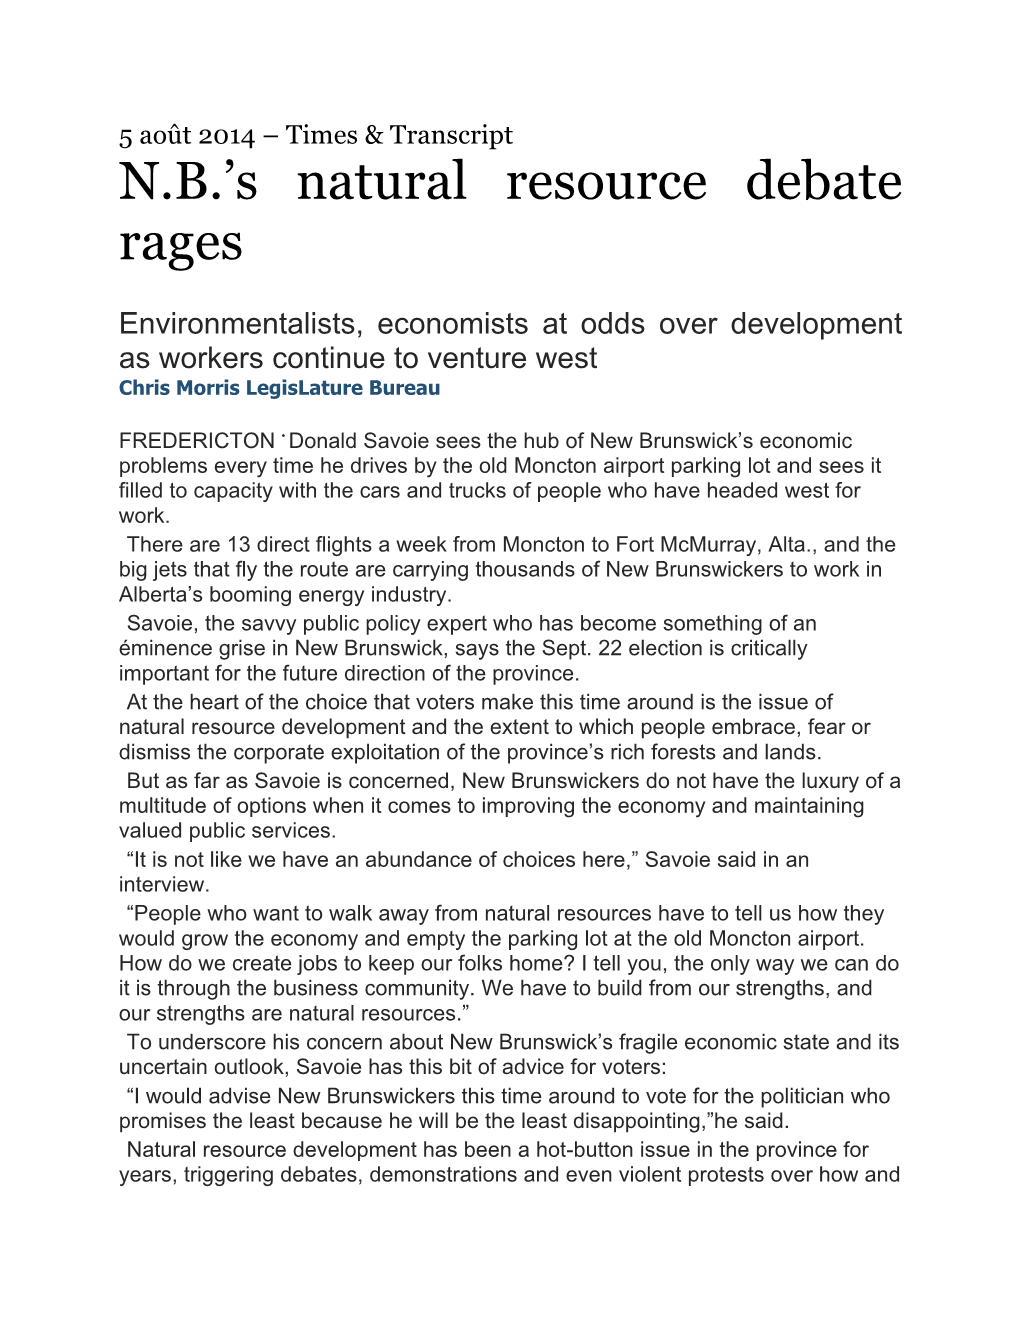 N.B.'S Natural Resource Debate Rages